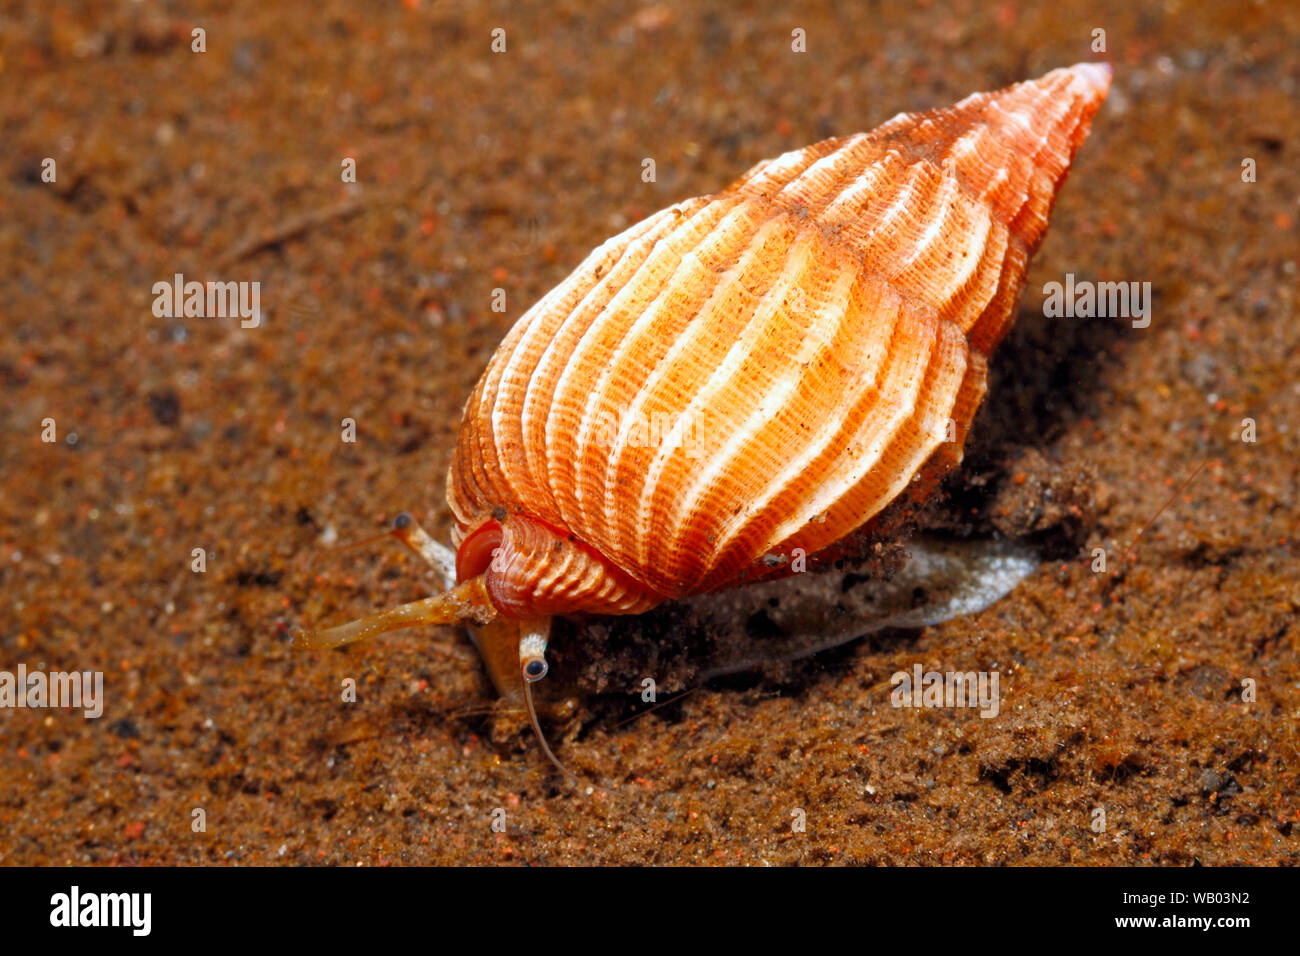 Concha de caracol de mar vivo fotografías e imágenes de alta resolución -  Alamy